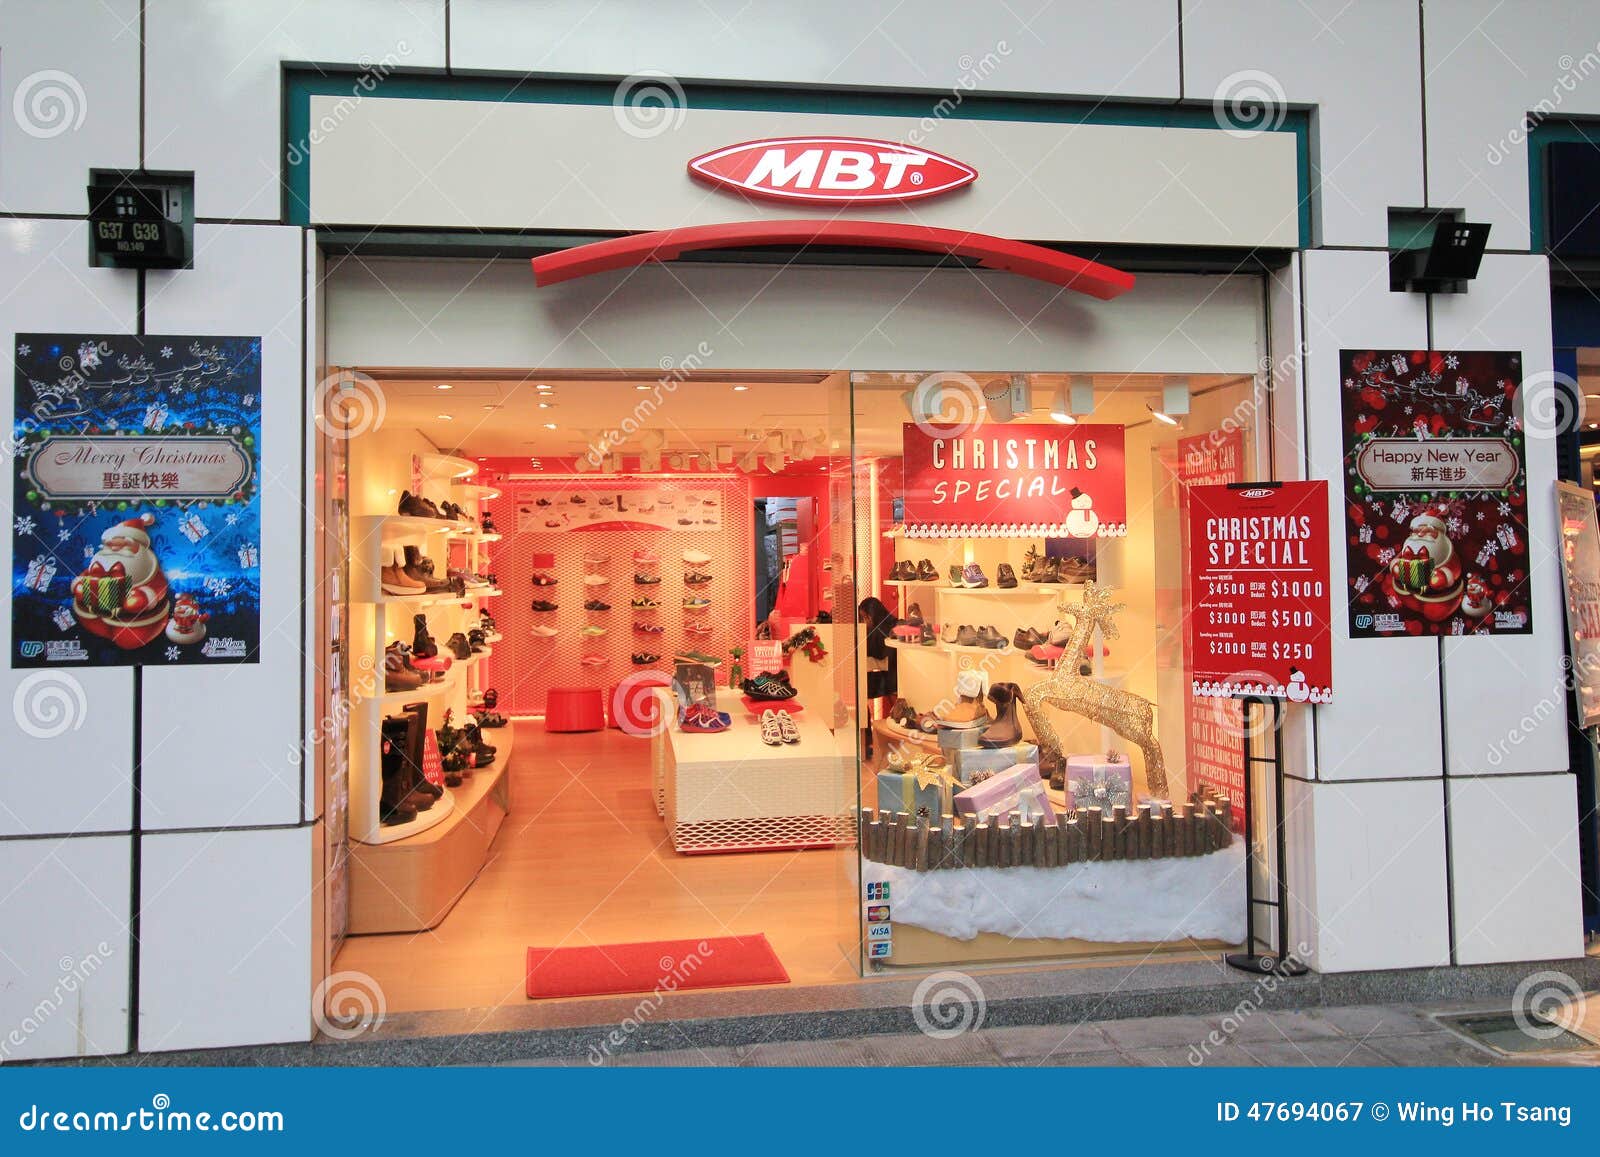 Mbt shop in hong kveekoong editorial photography. Image veeko - 47694067